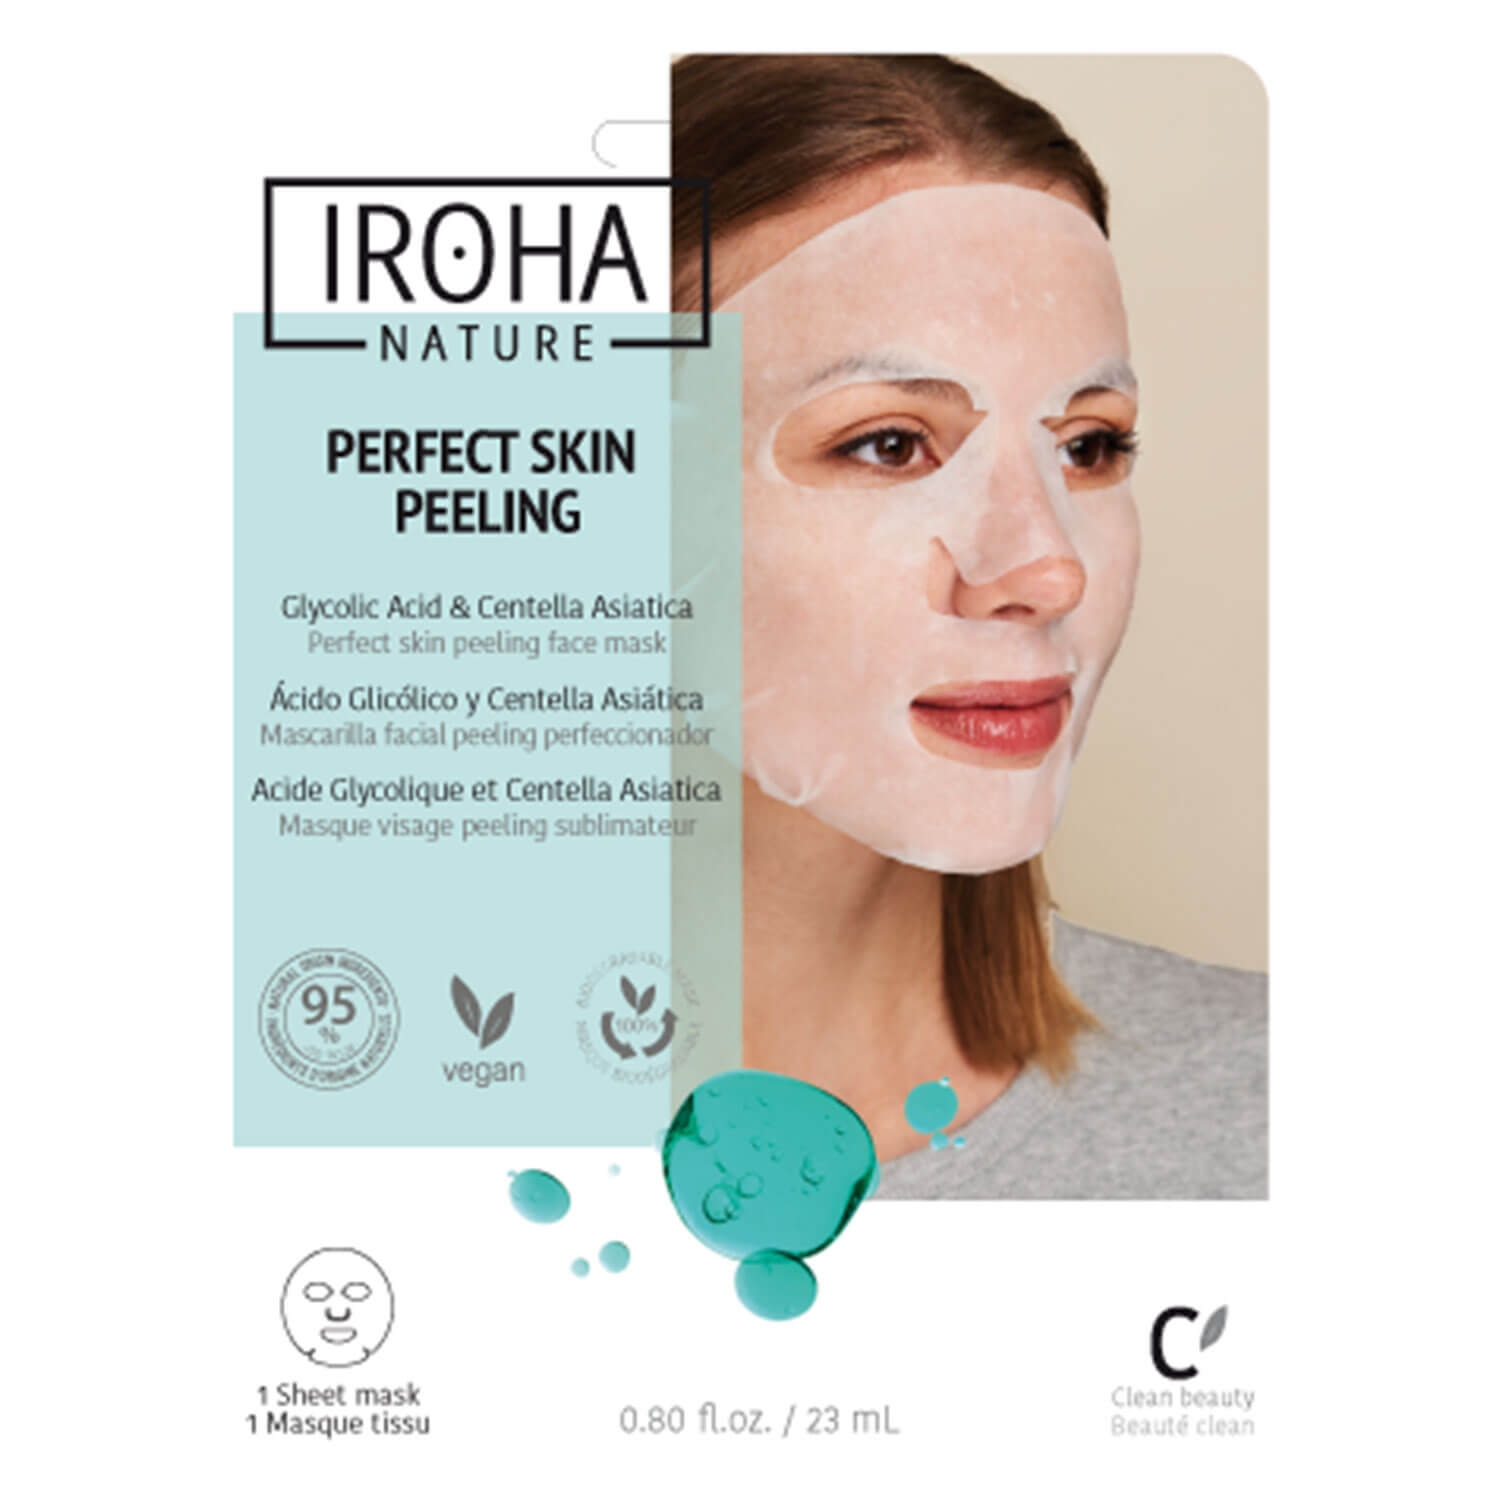 Produktbild von Iroha Nature - Perfect Skin Peeling Glycolic Acid & Centella Asiatica Face Mask